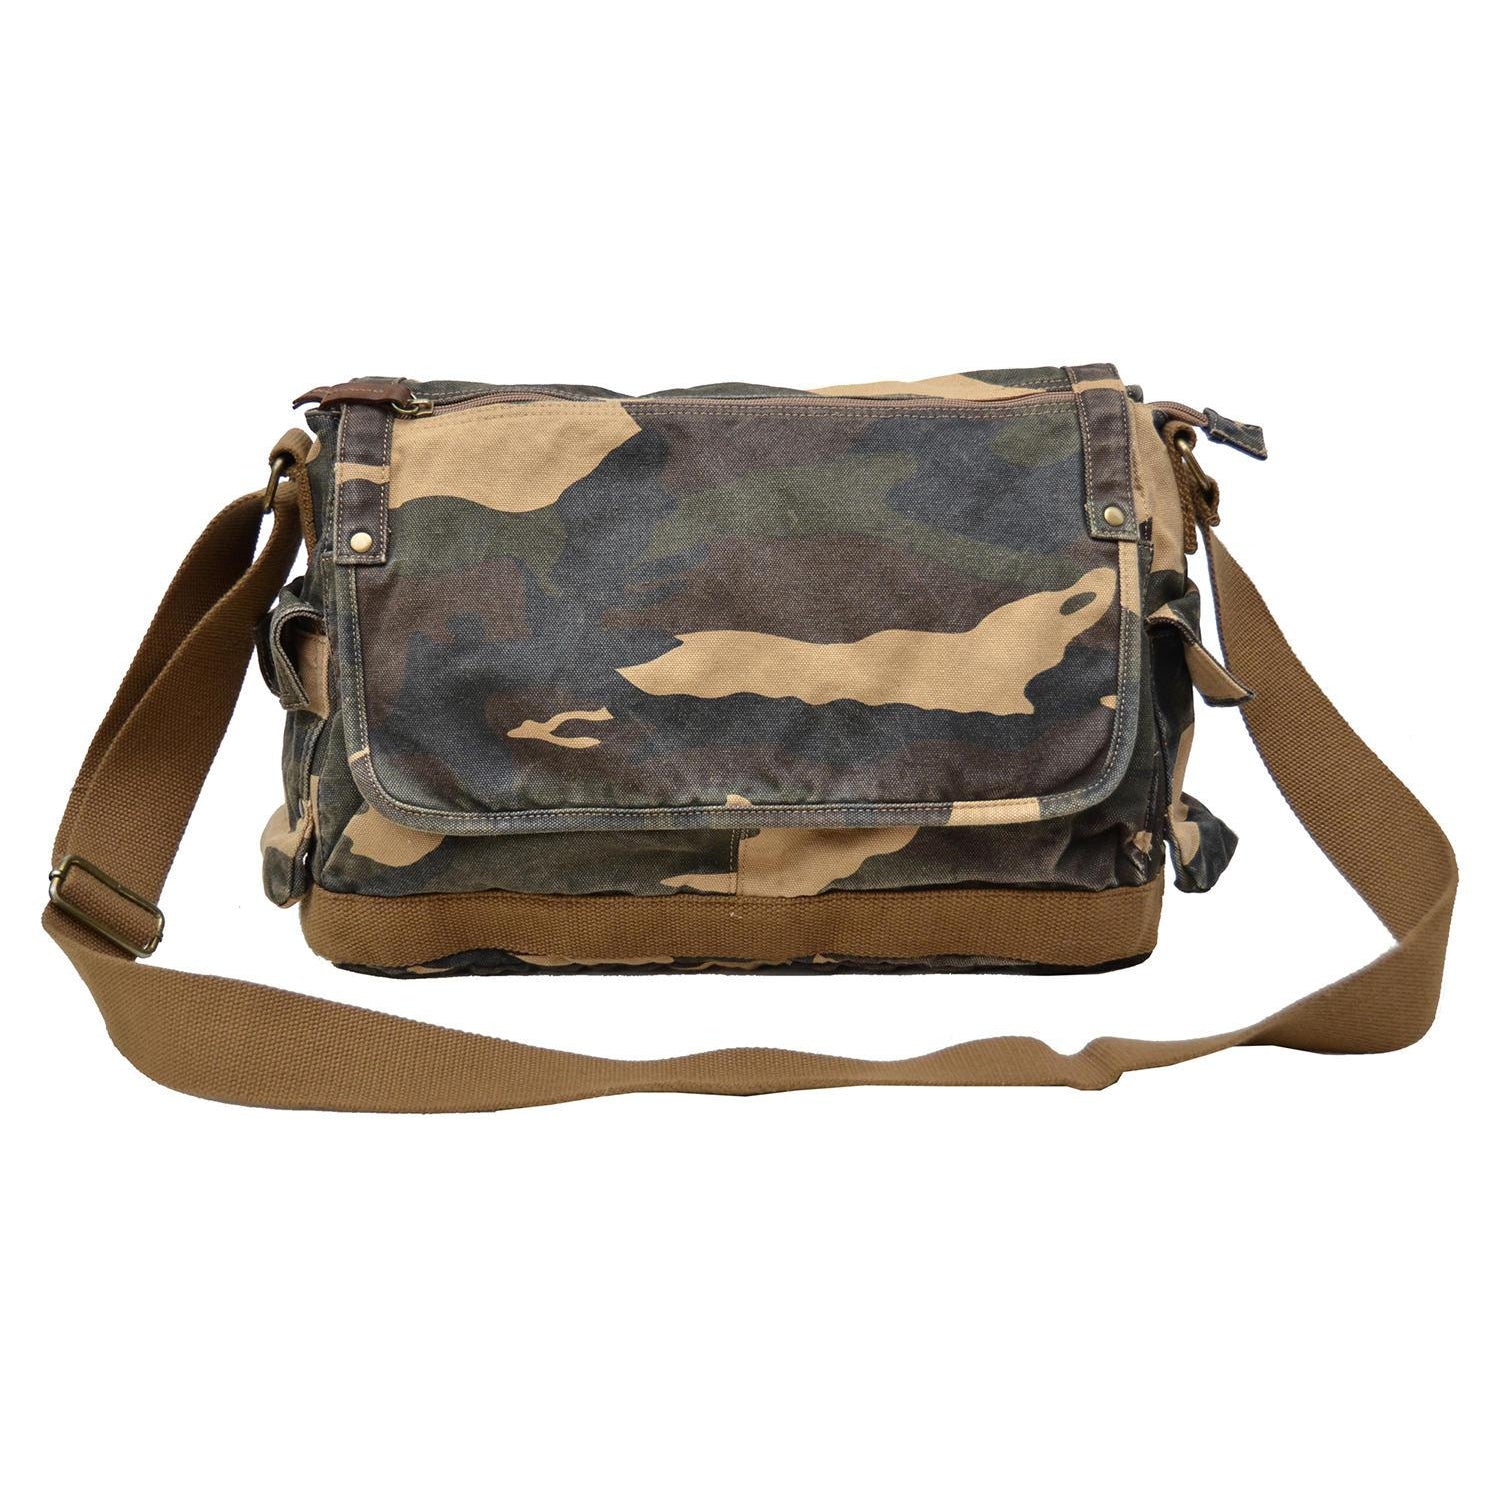 Gootium Messenger Bag - Canvas Crossbody Shoulder Purse Vintage Satchel